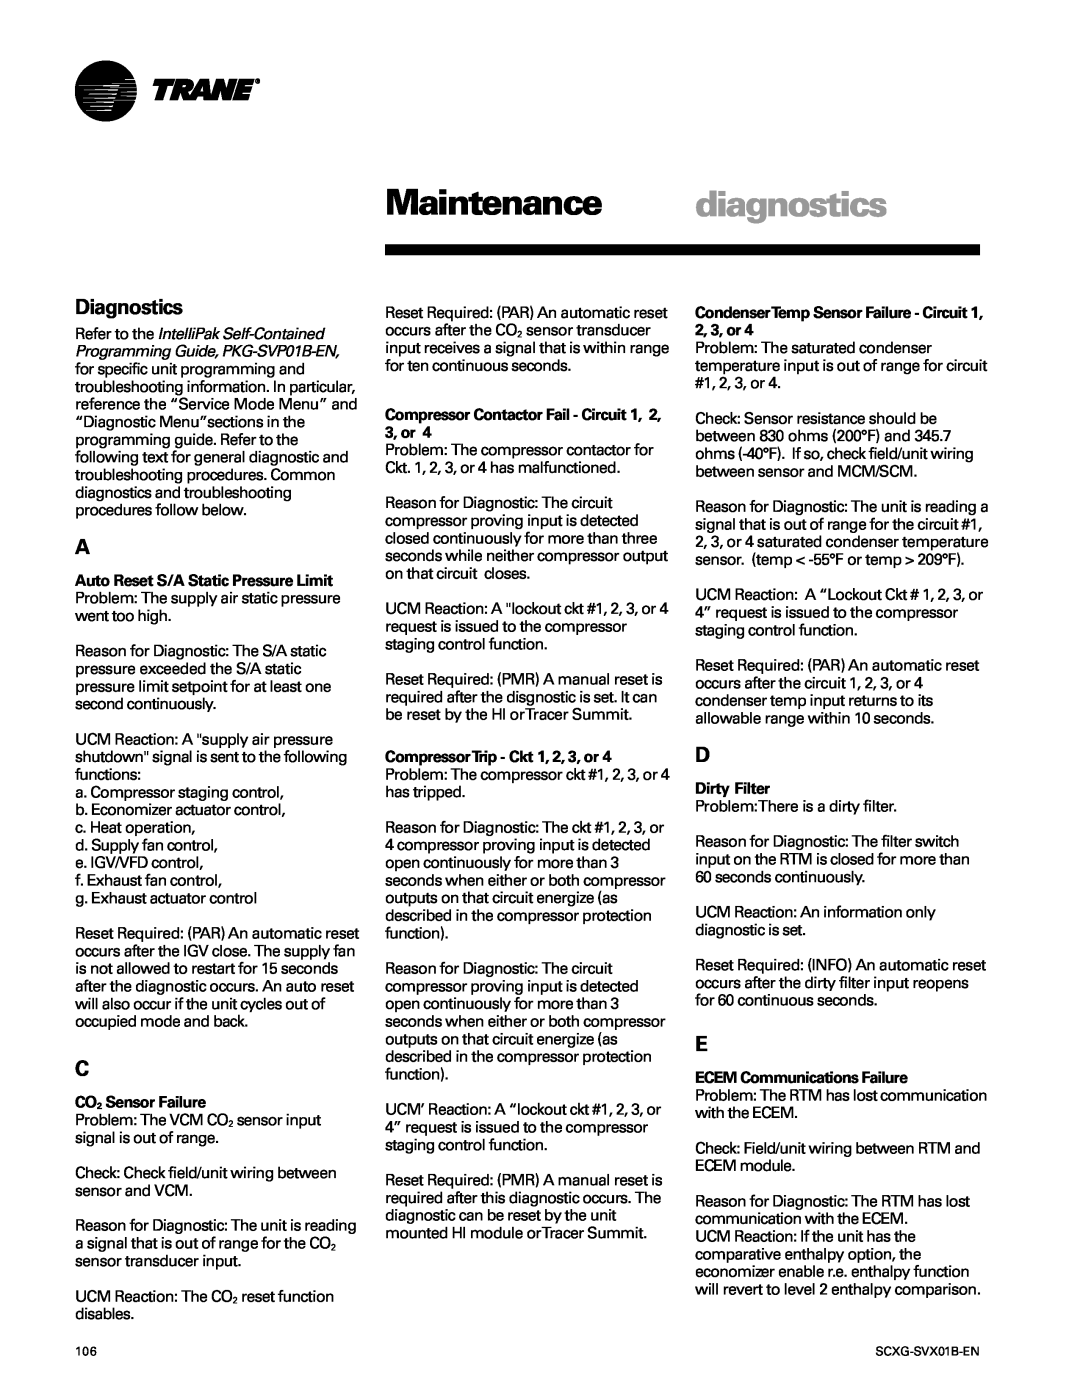 Trane SCXG-SVX01B-EN Maintenance diagnostics, Diagnostics, CO2 Sensor Failure, Dirty Filter, ECEM Communications Failure 